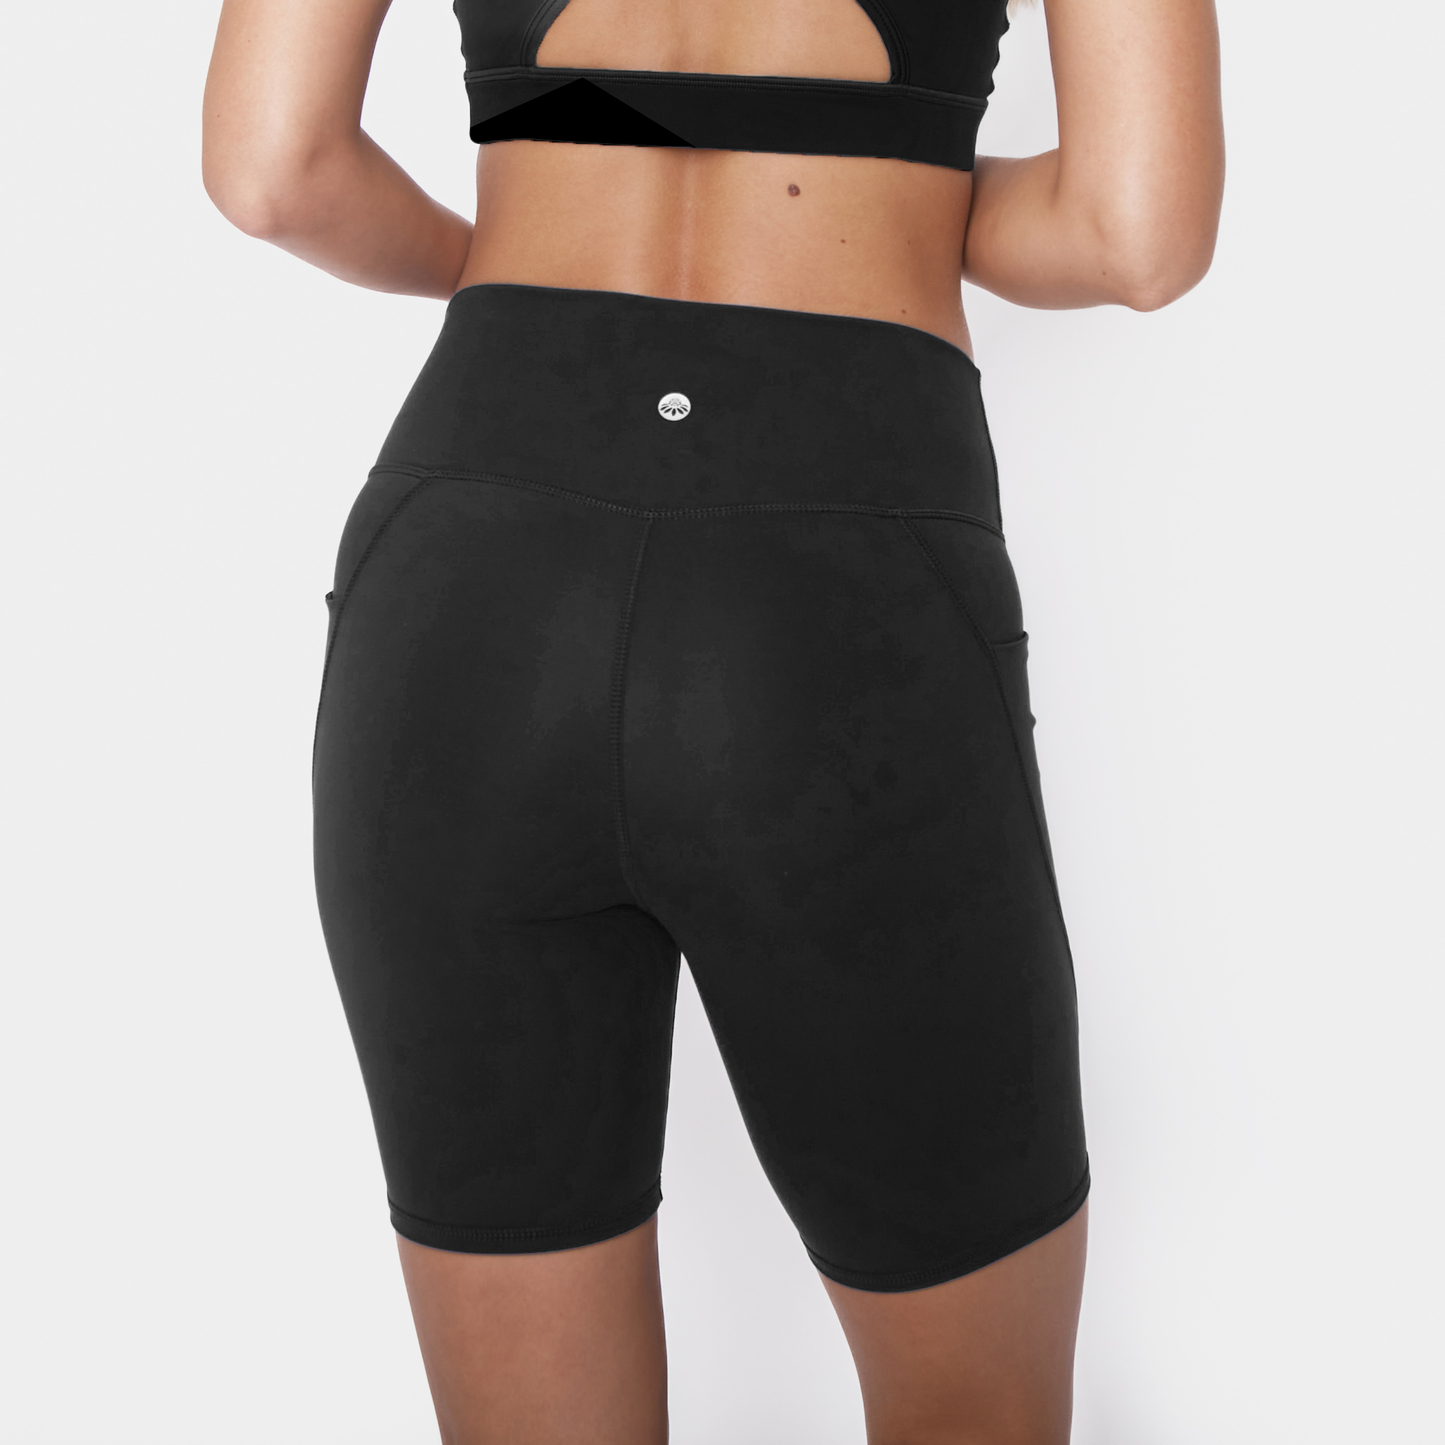 Skin Biker Shorts (8 in. inseam) - Black